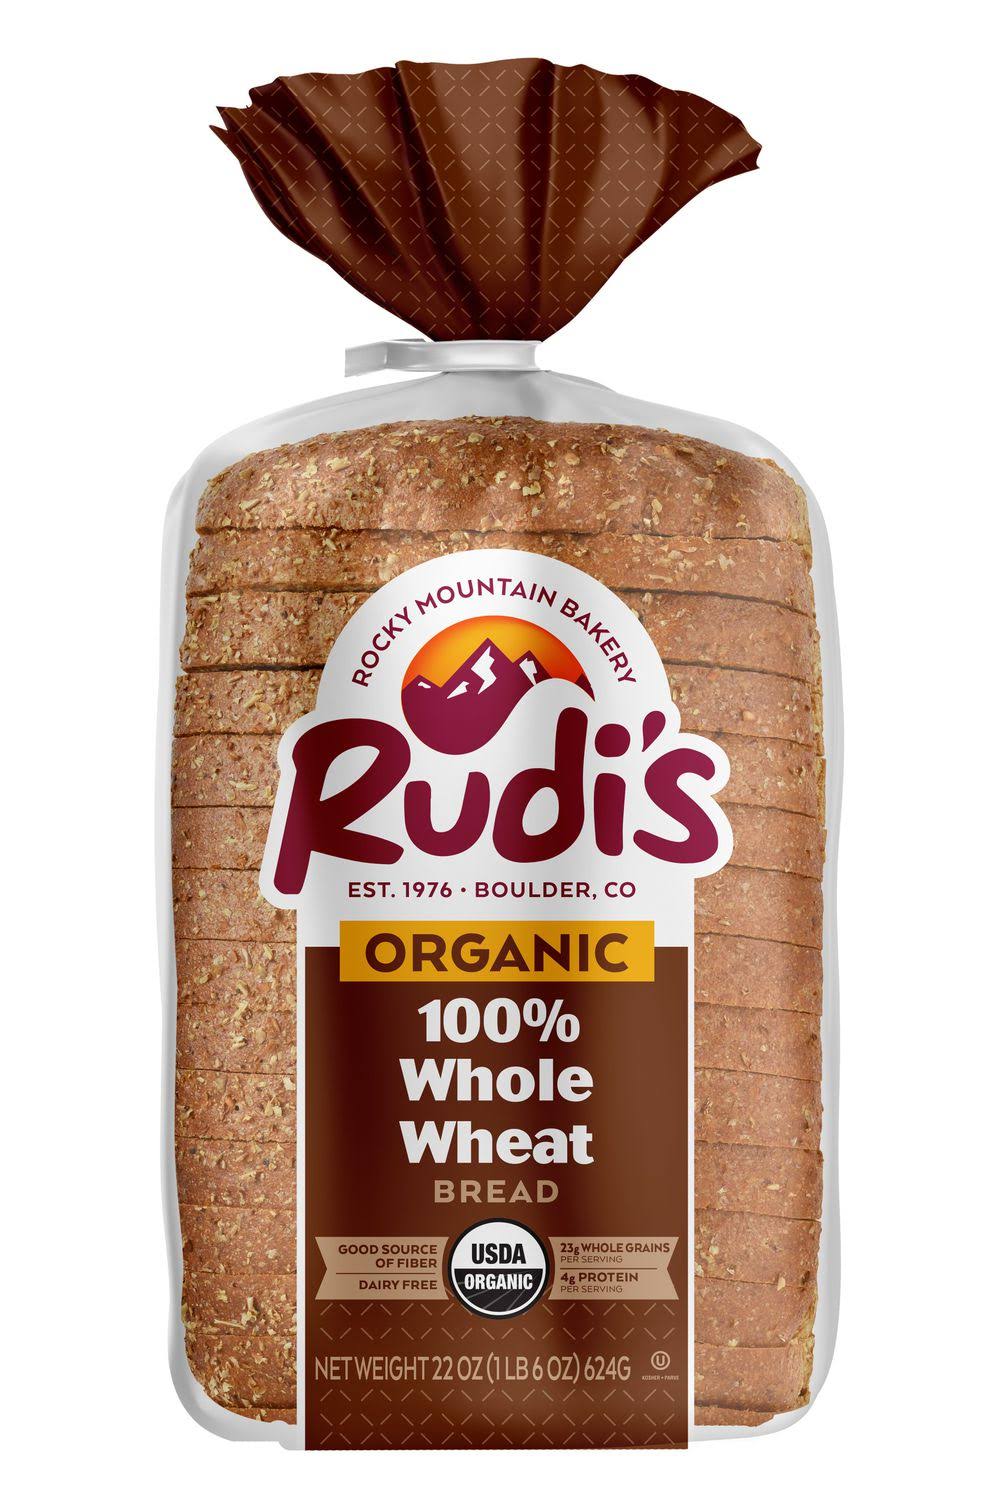 Rudi's Organic Bakery Bread - Whole Wheat, 22oz